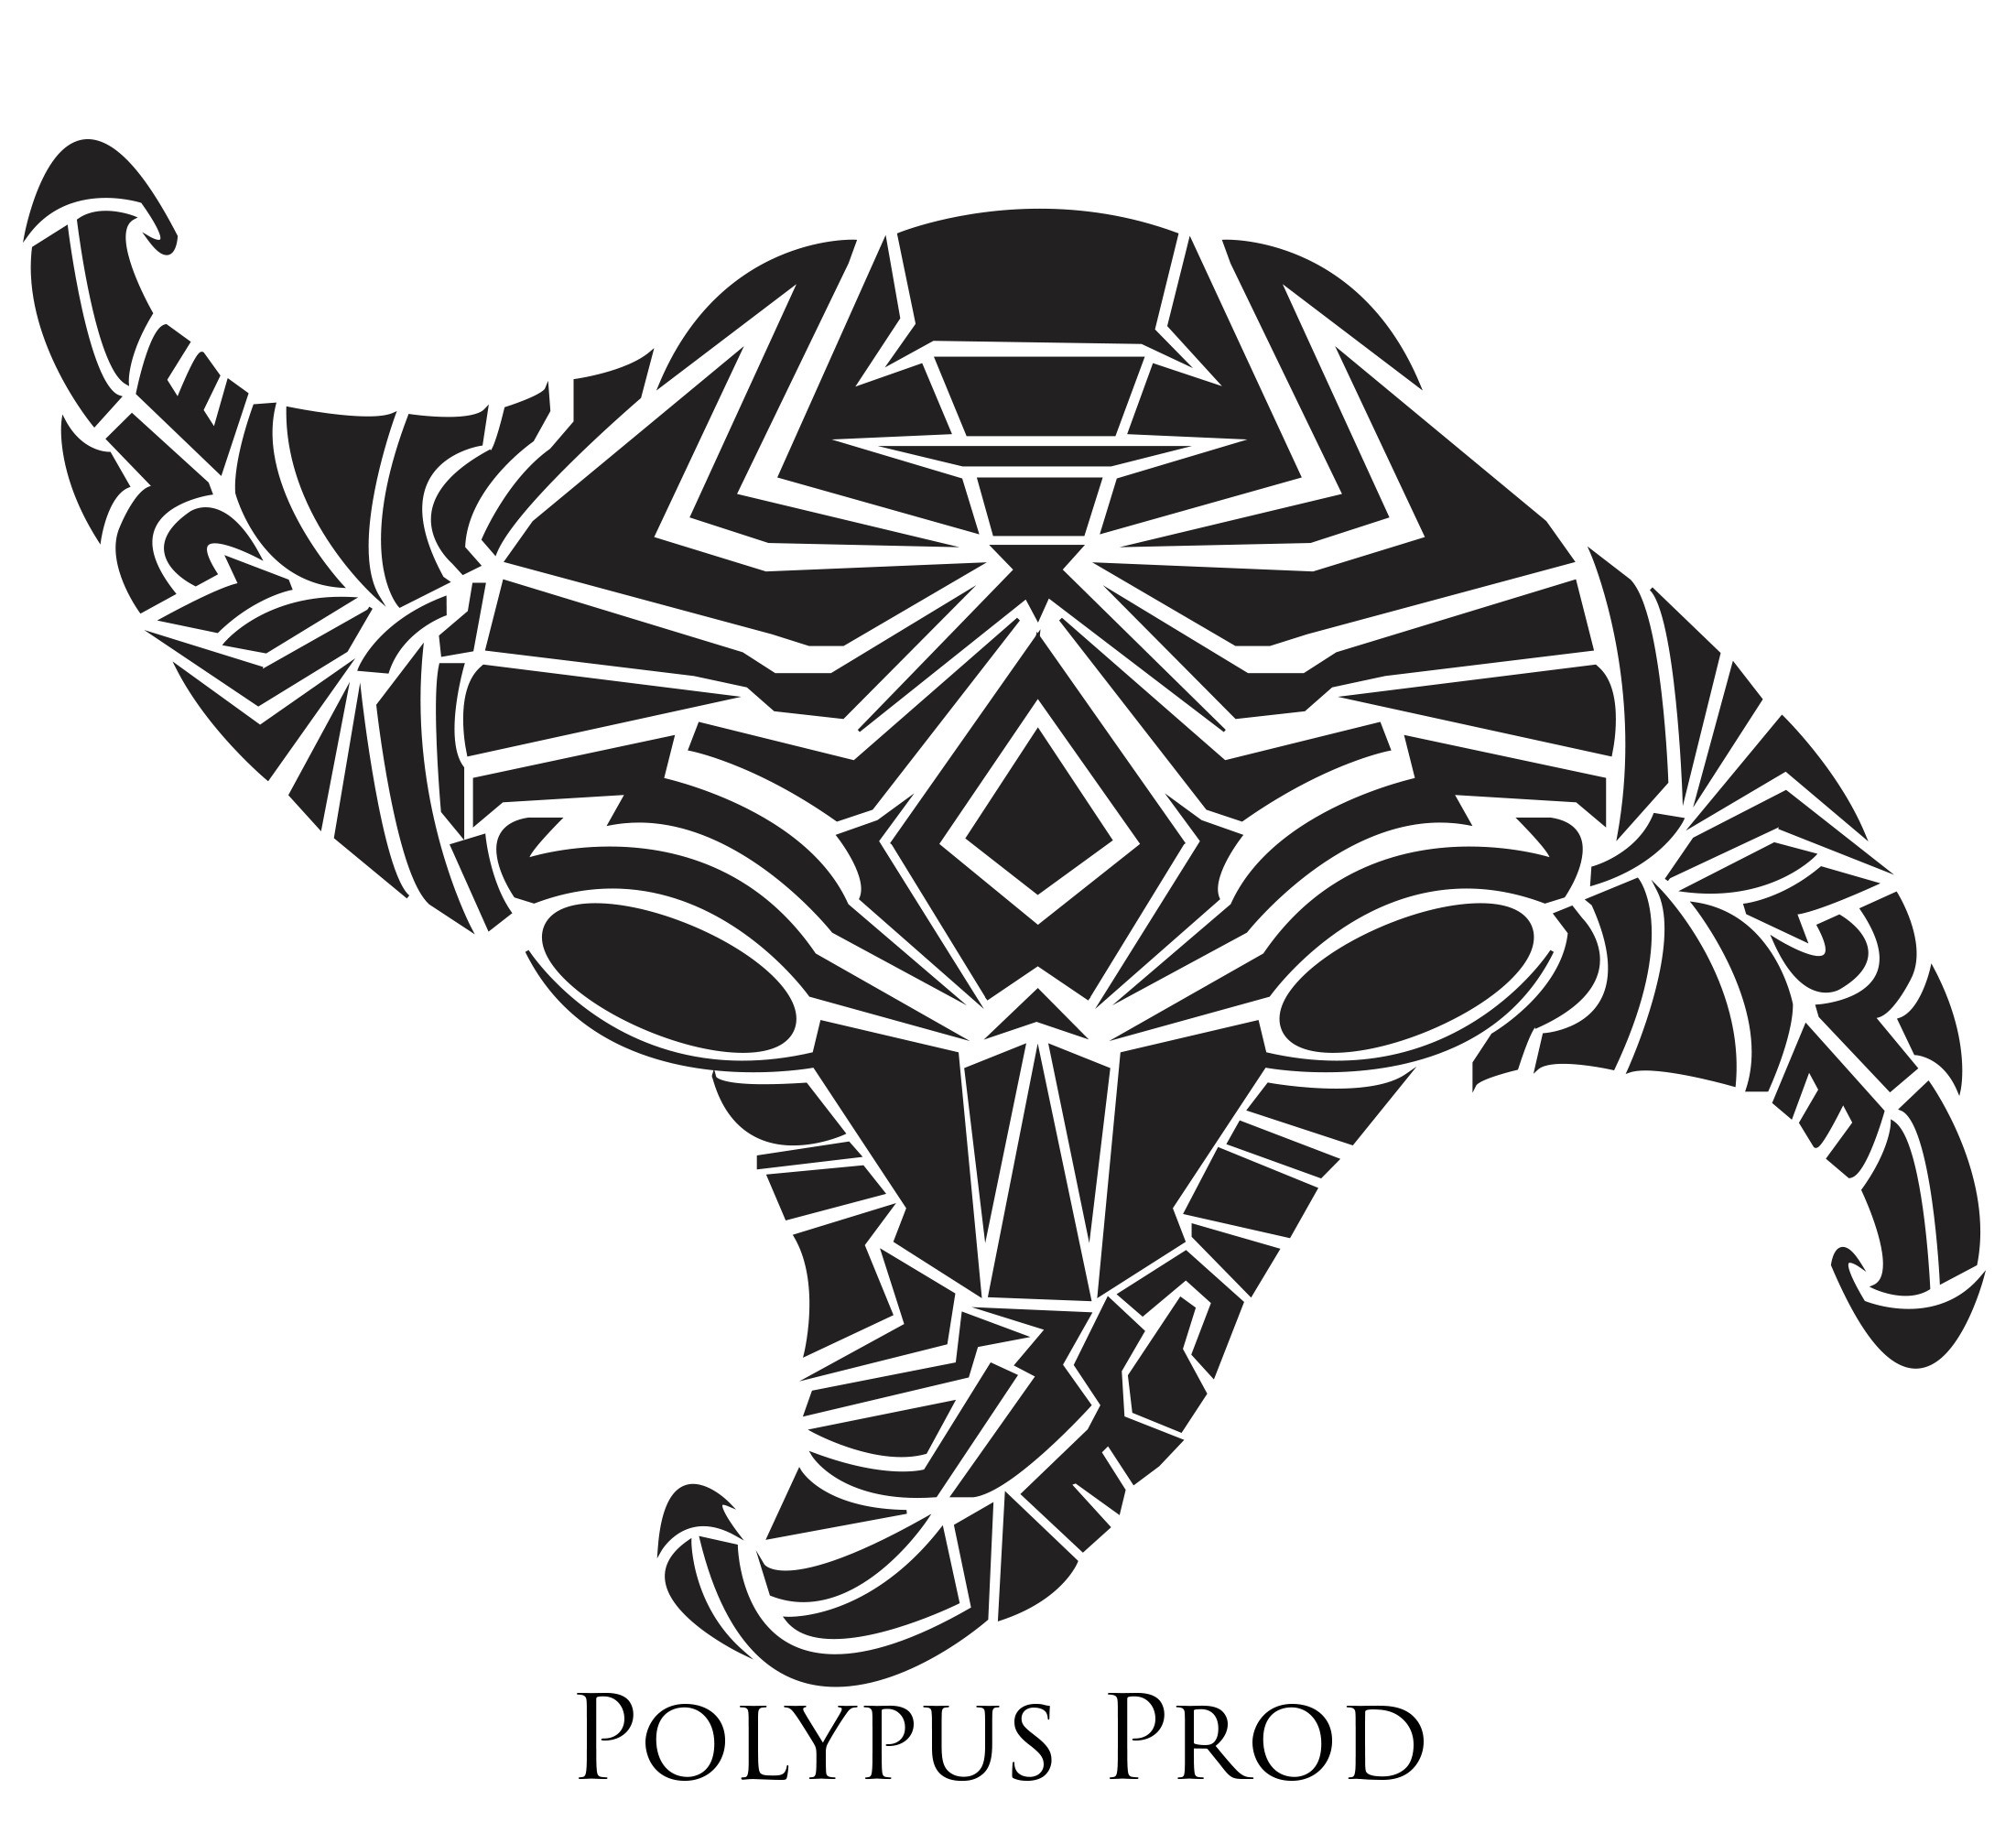 Polypus Prod